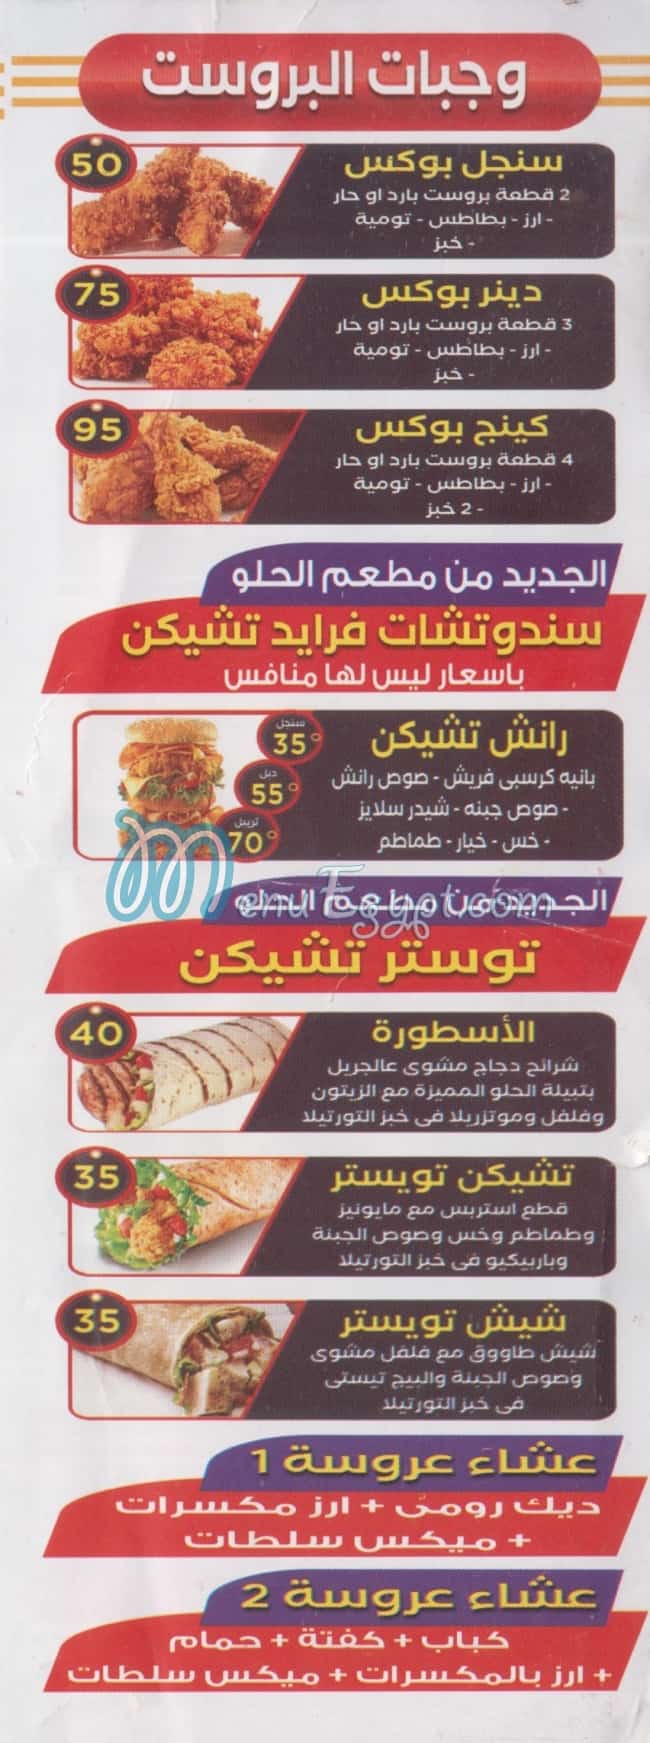 El Helw Restaurant menu Egypt 1